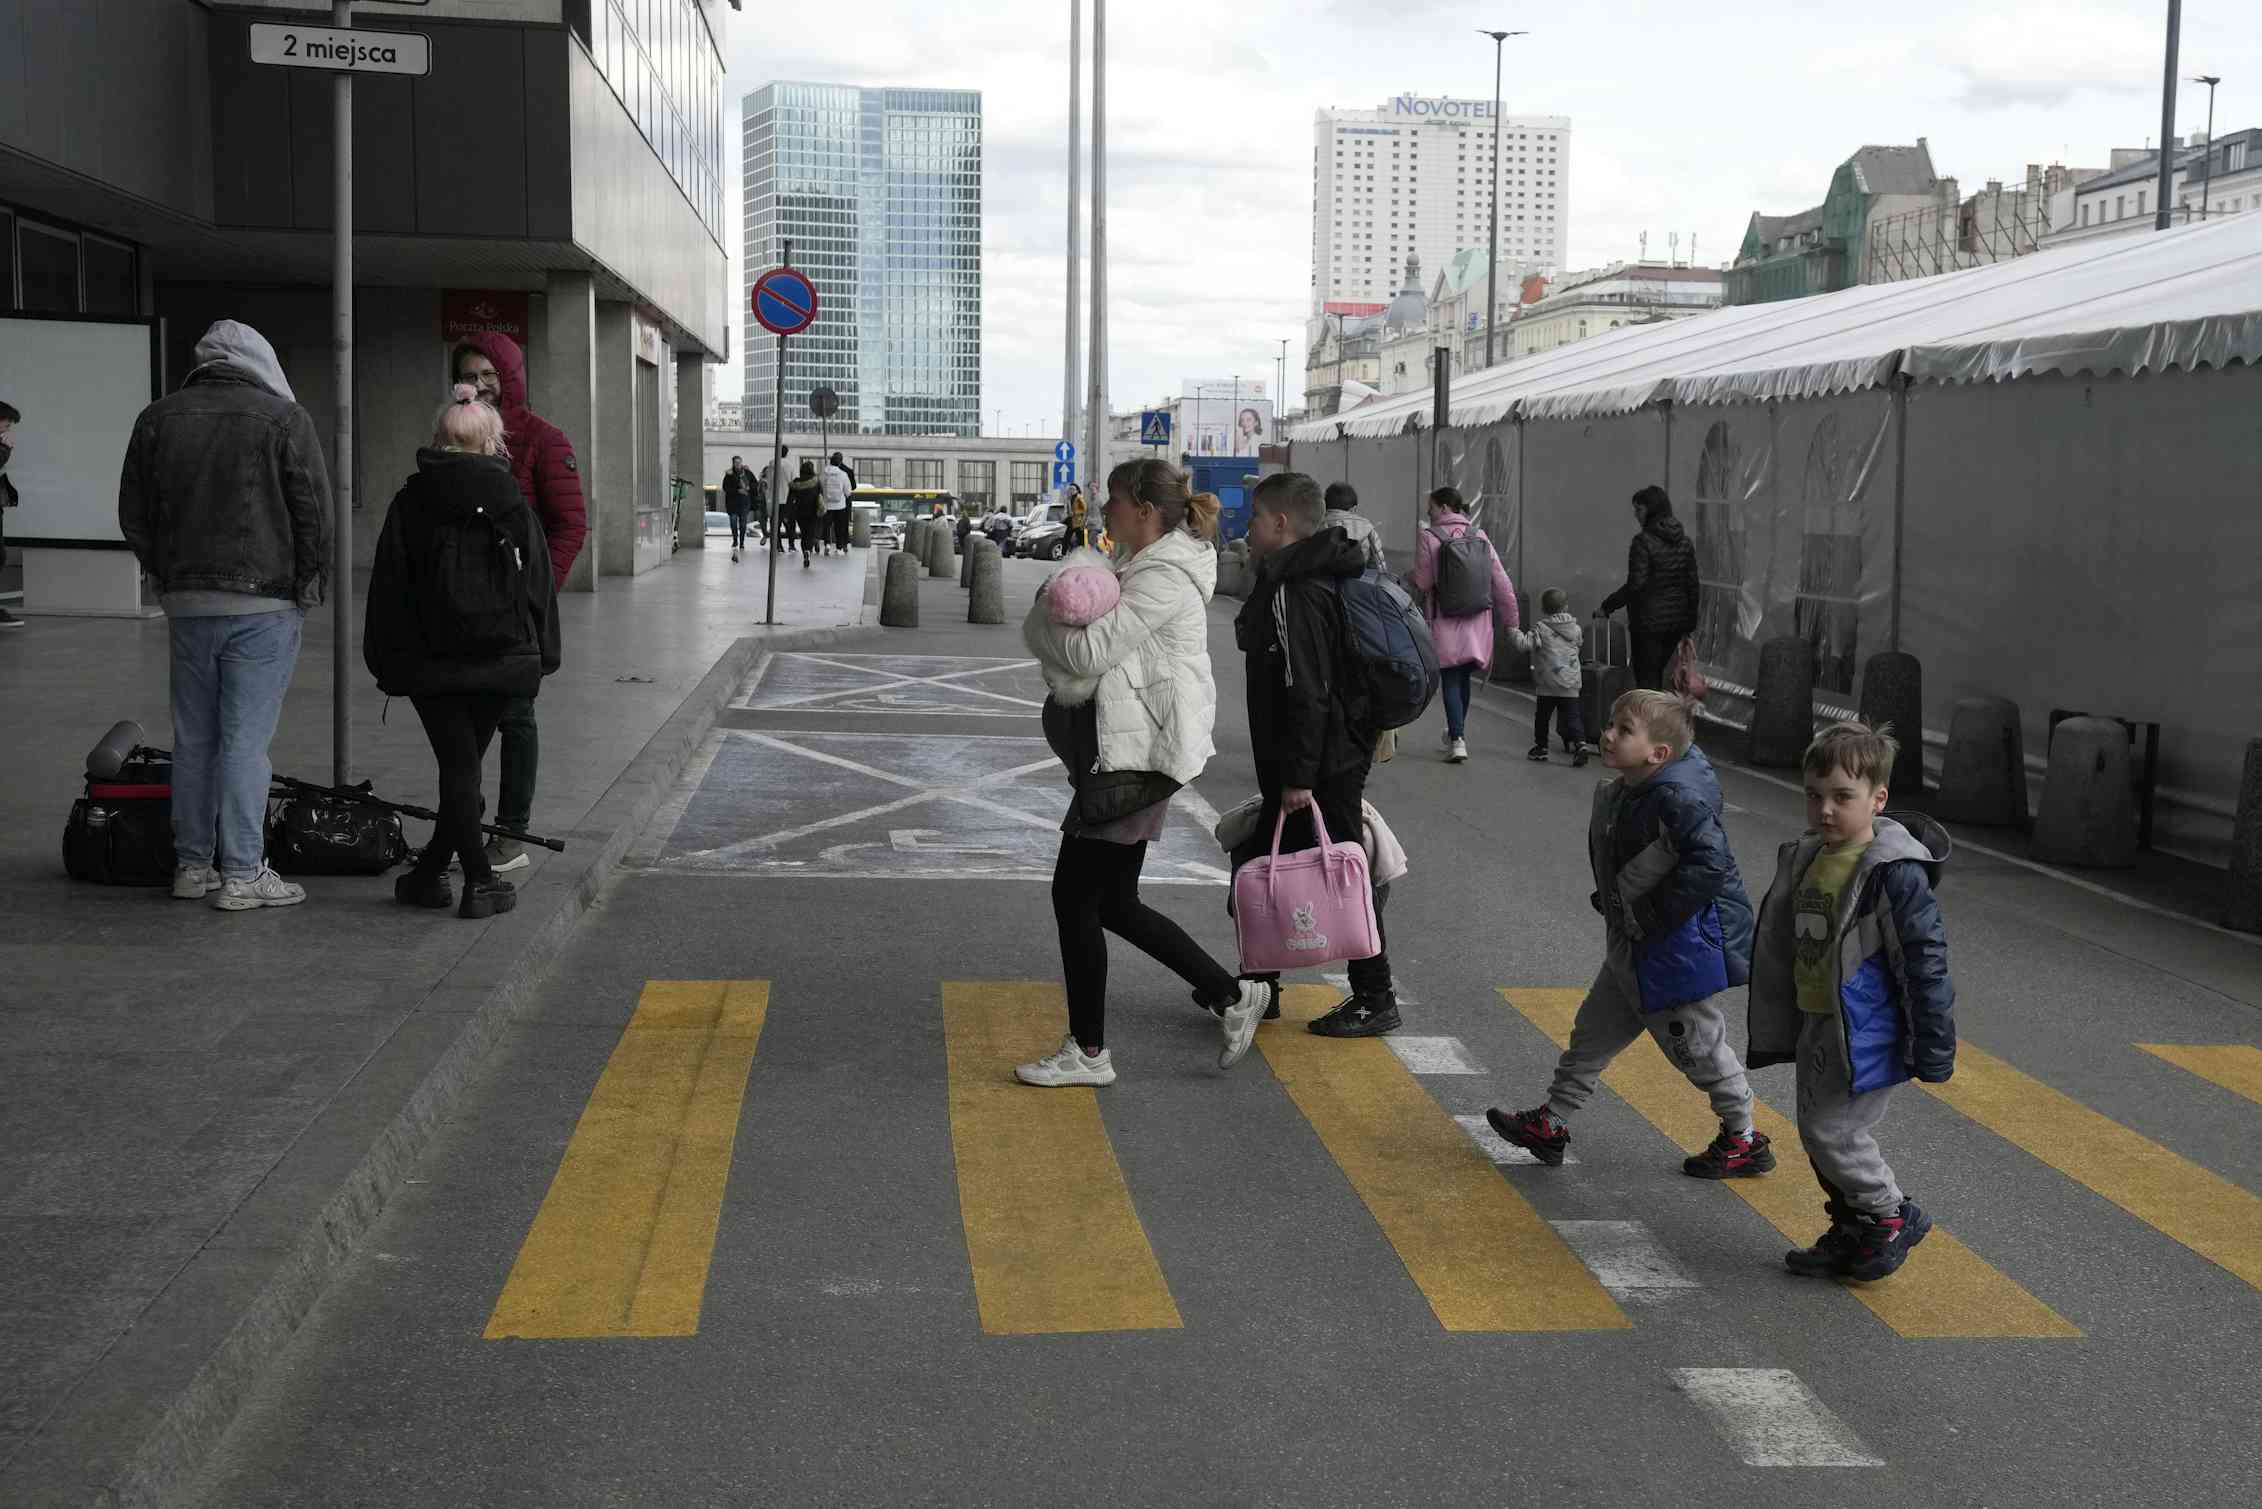 A woman crosses a crosswalk followed by two children outside of a train station.